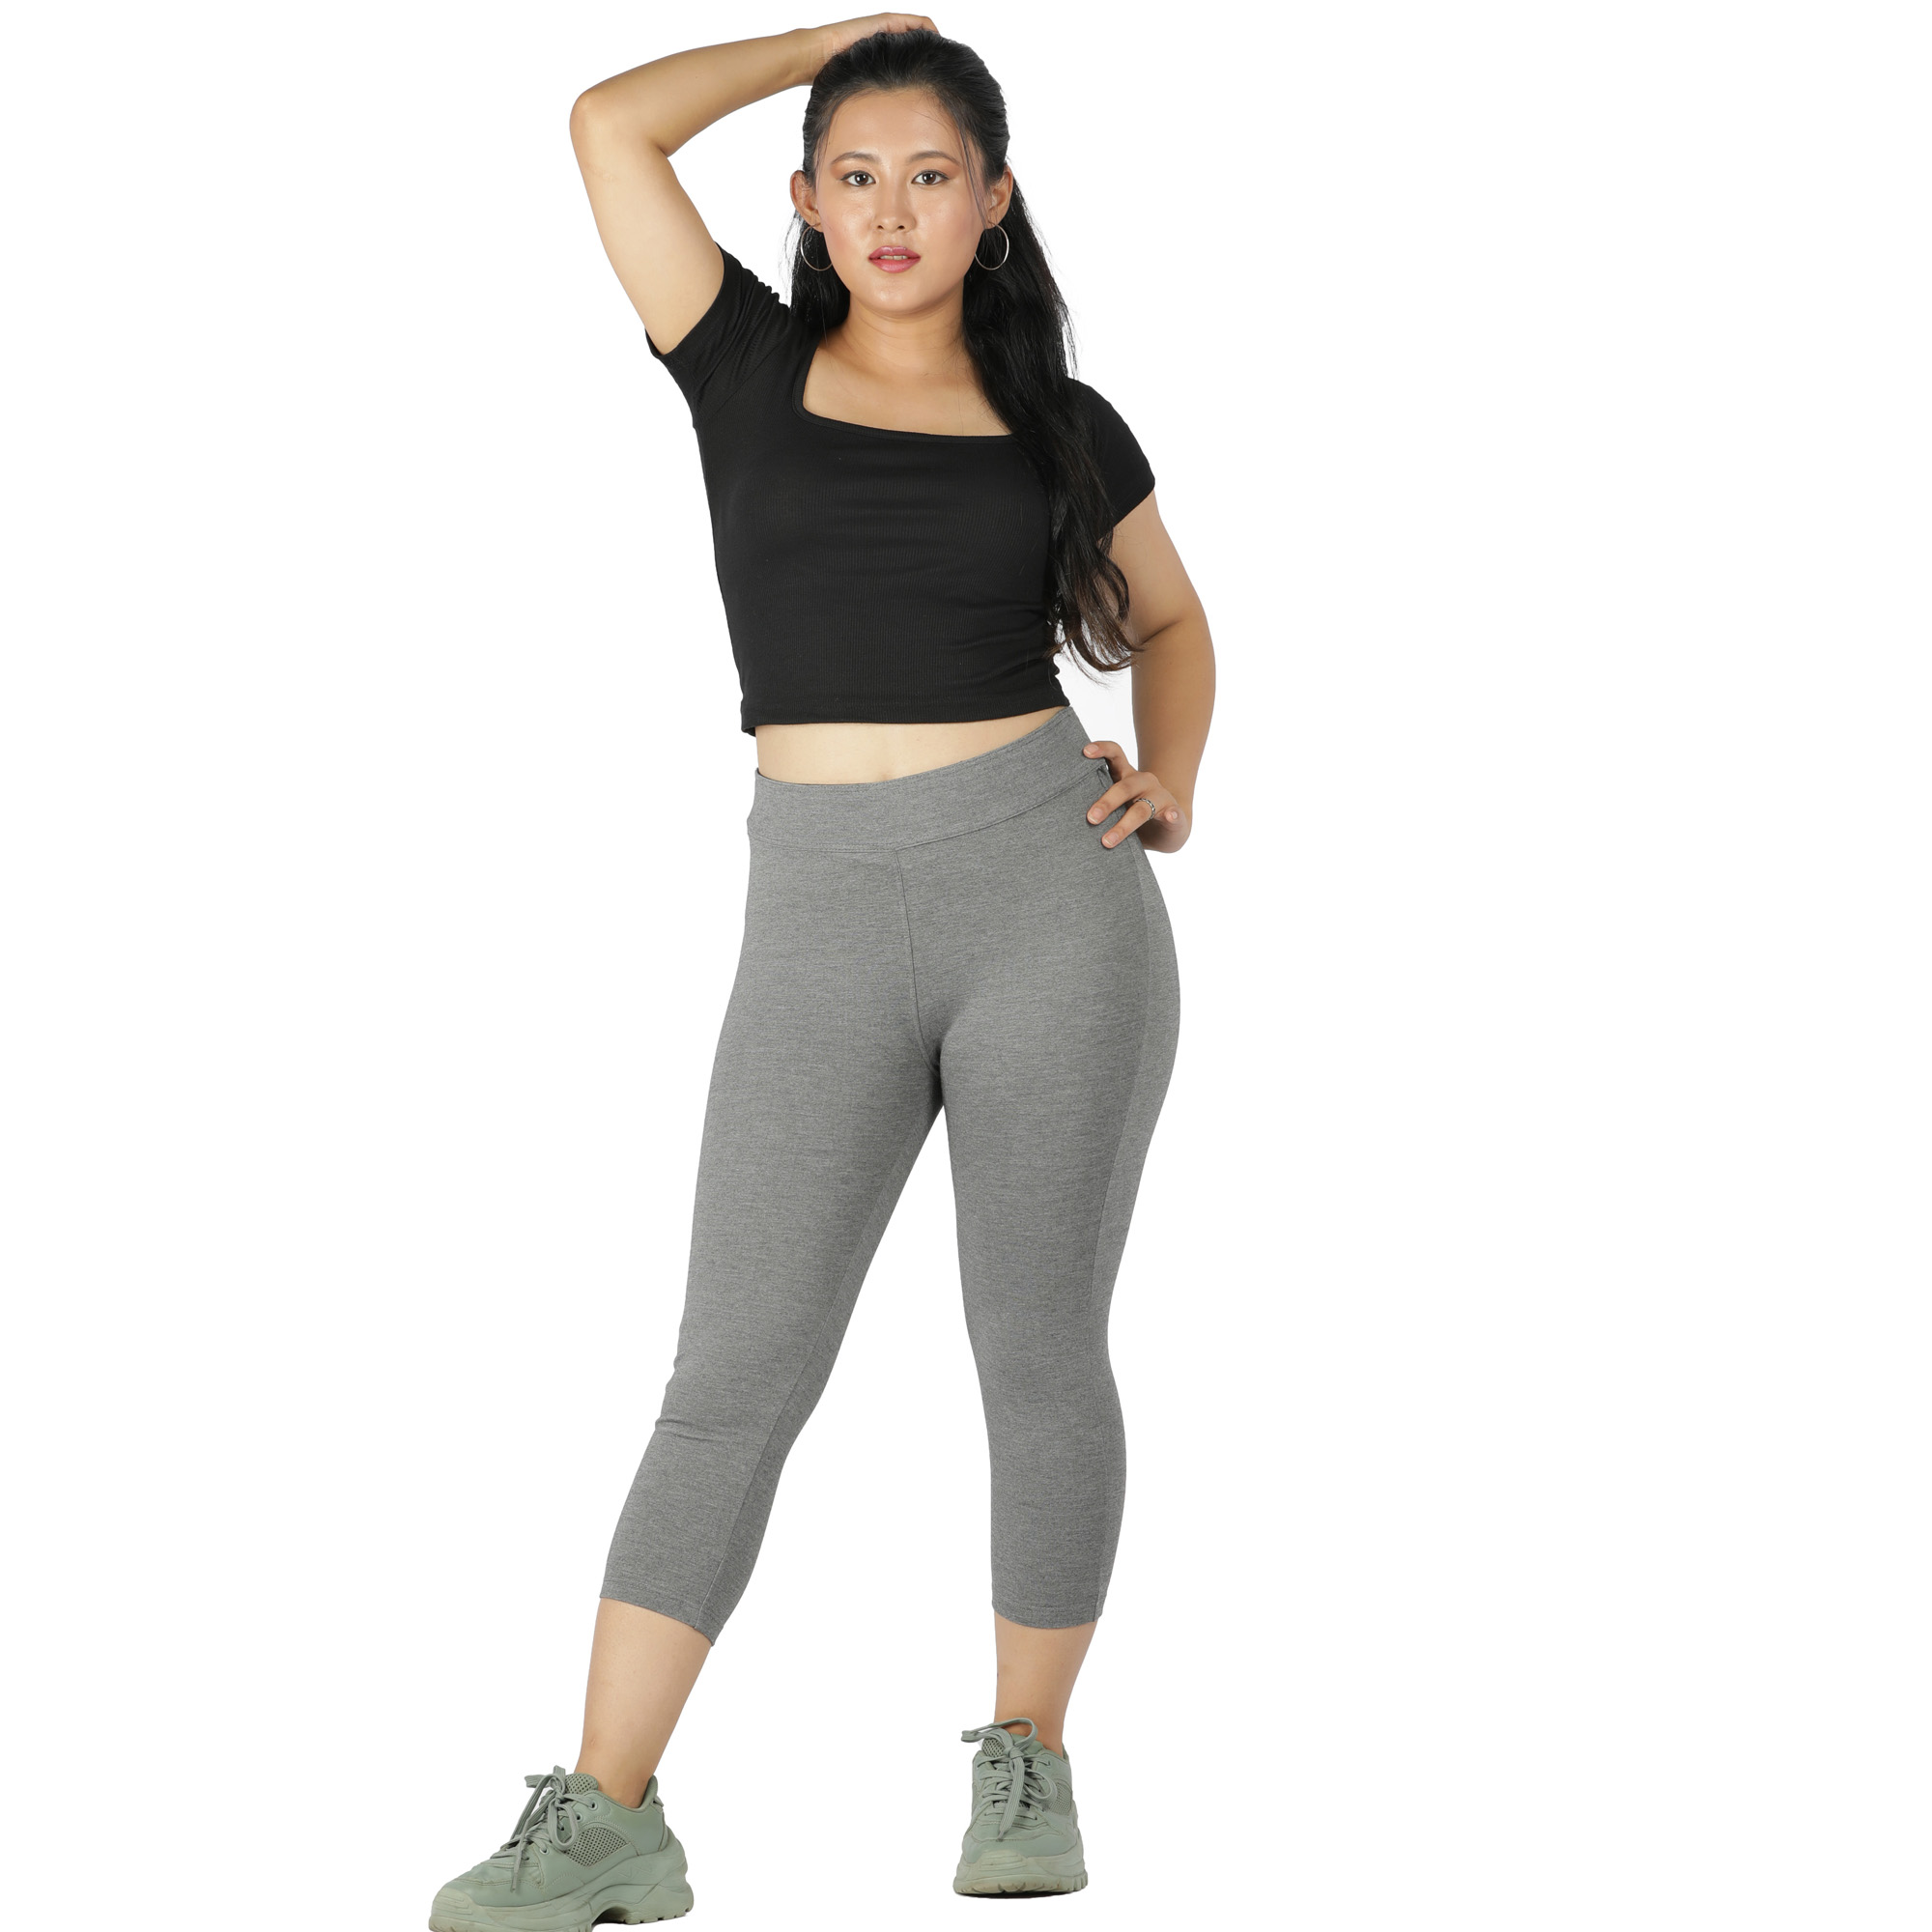 Grey capris for women gym wear Low rise - Belore Slims